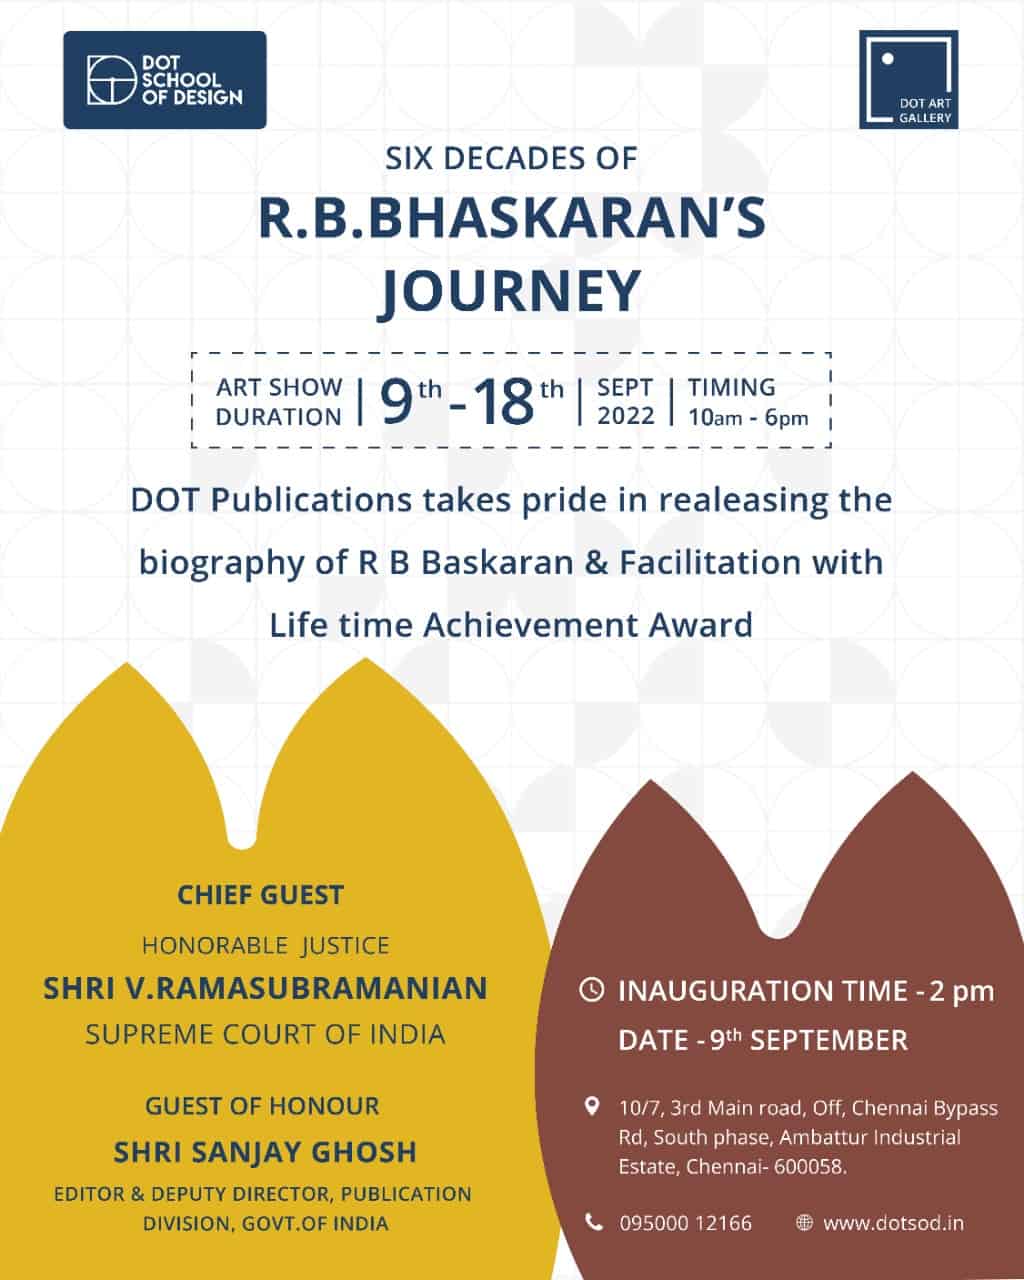 Six Decades of R.B. Bhaskaran's Journey